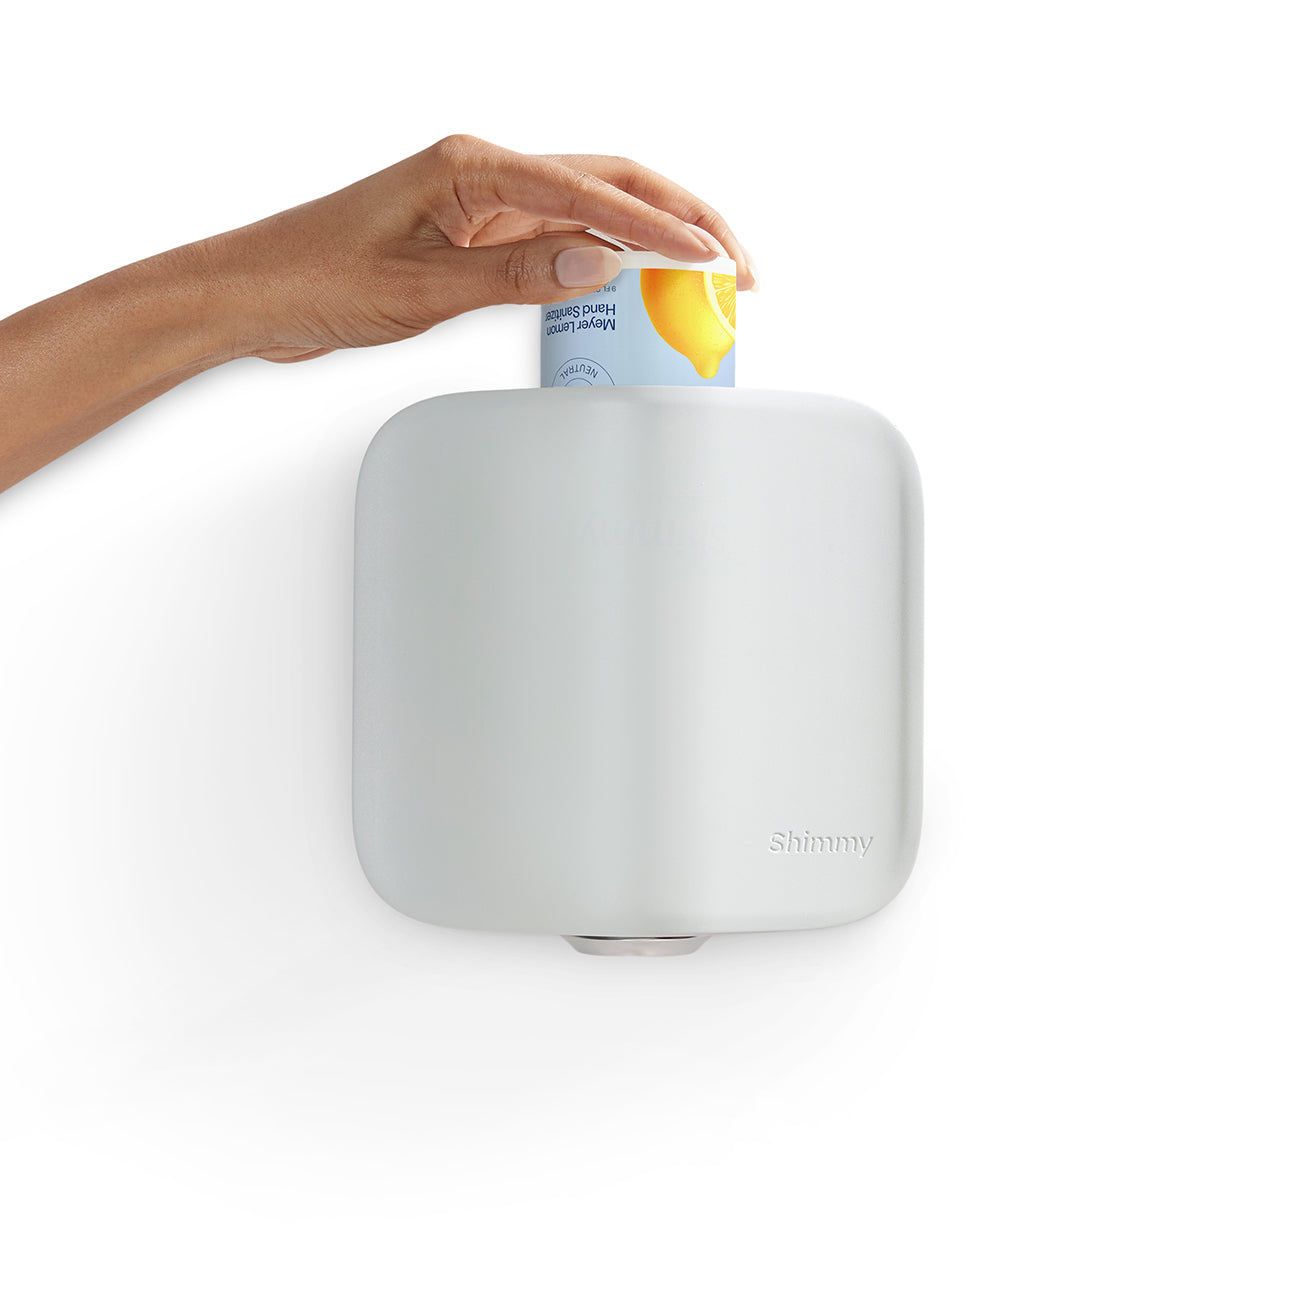 Shimmy Home Touchless Hand Sanitizer Dispenser Soft Gray [ALL-VARIANTS] - 